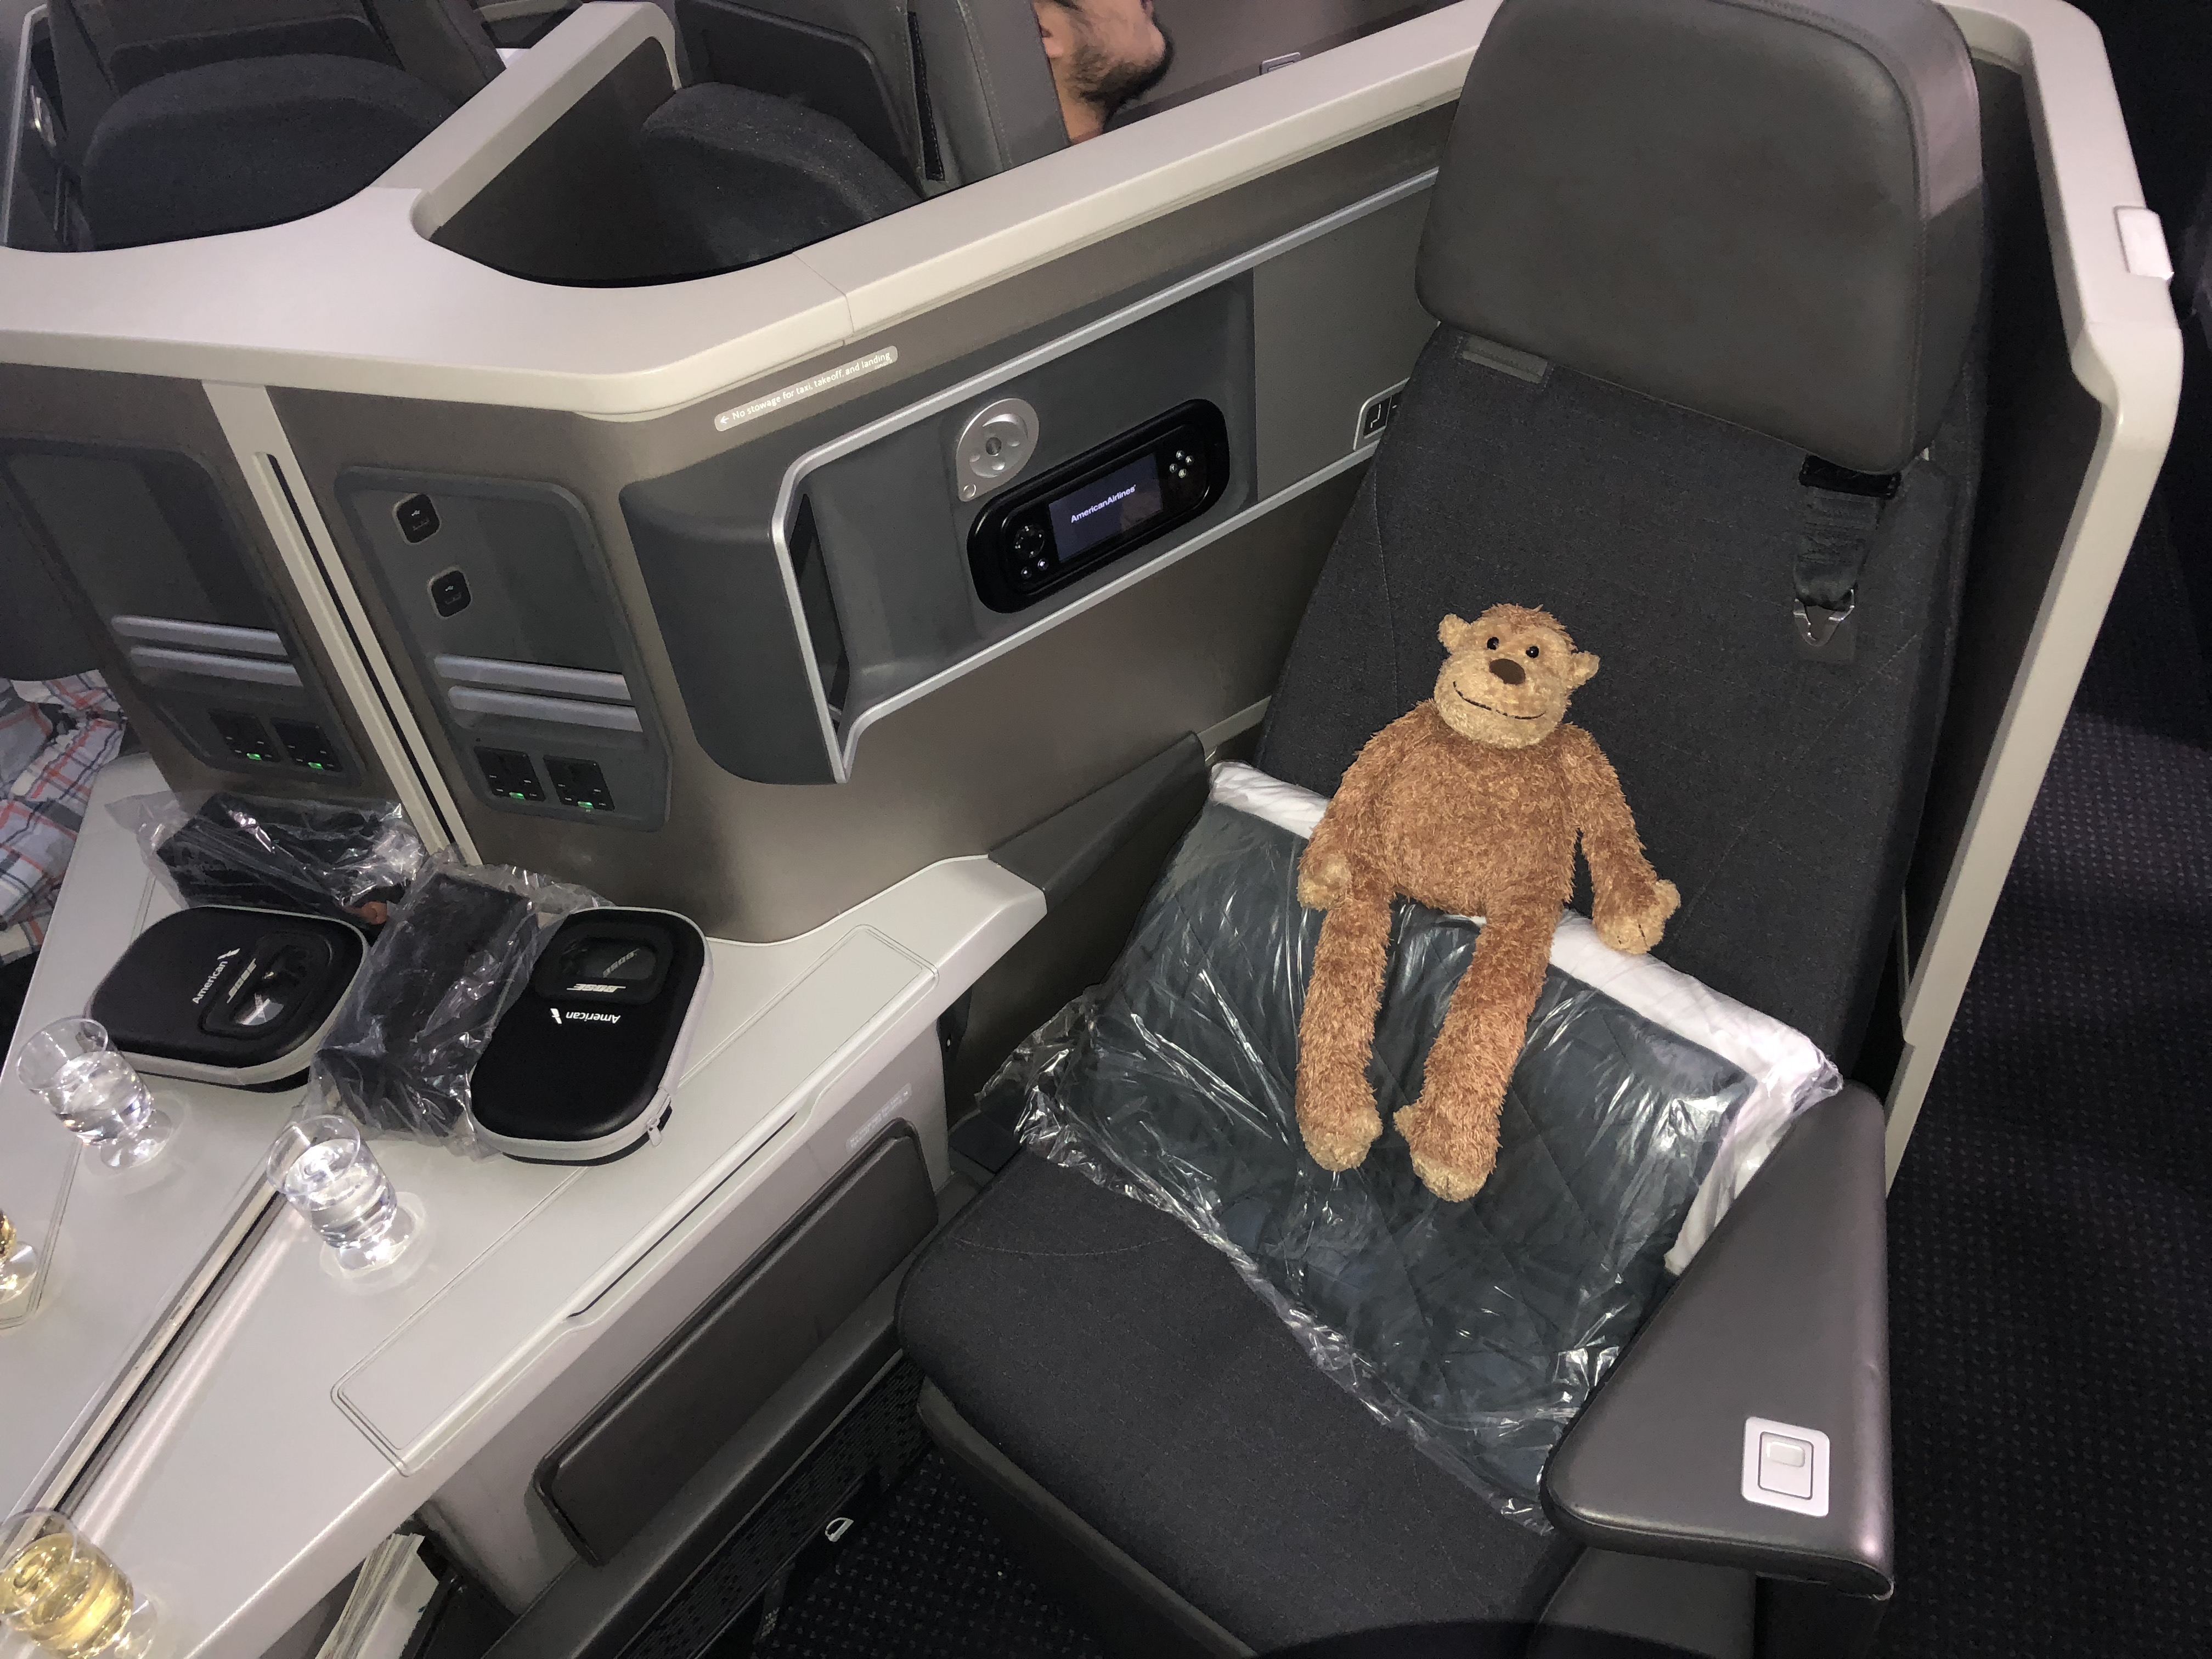 a stuffed animal on a seat